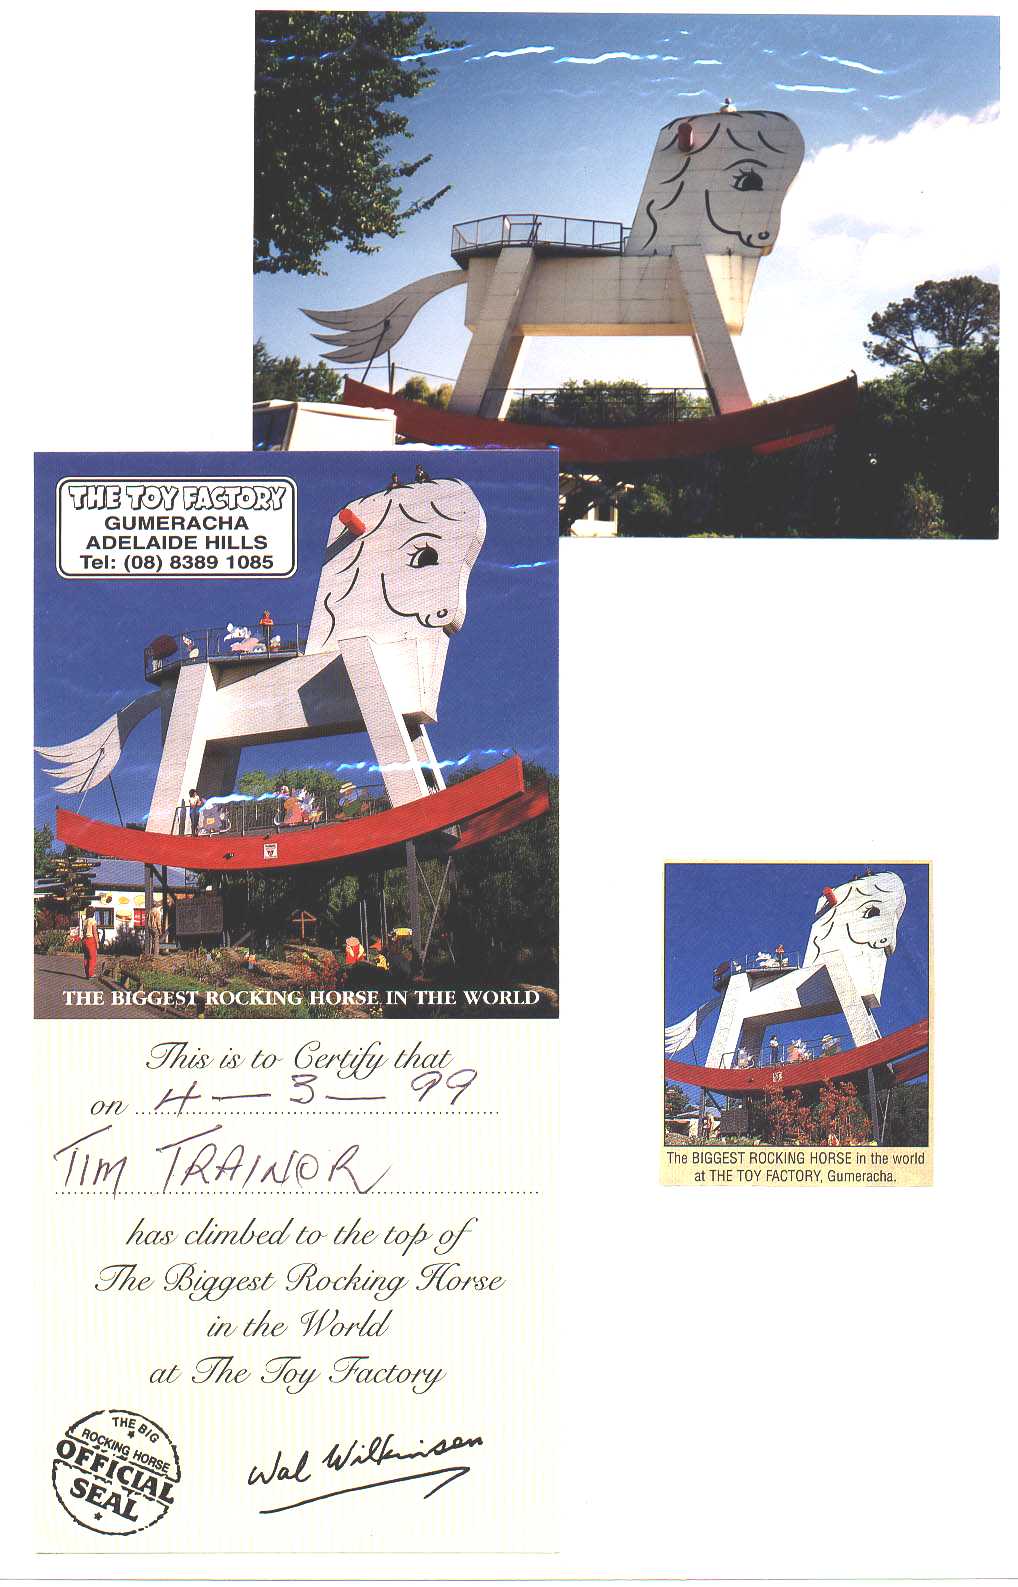 Big Rocking Horse Adelaide Hills Australia